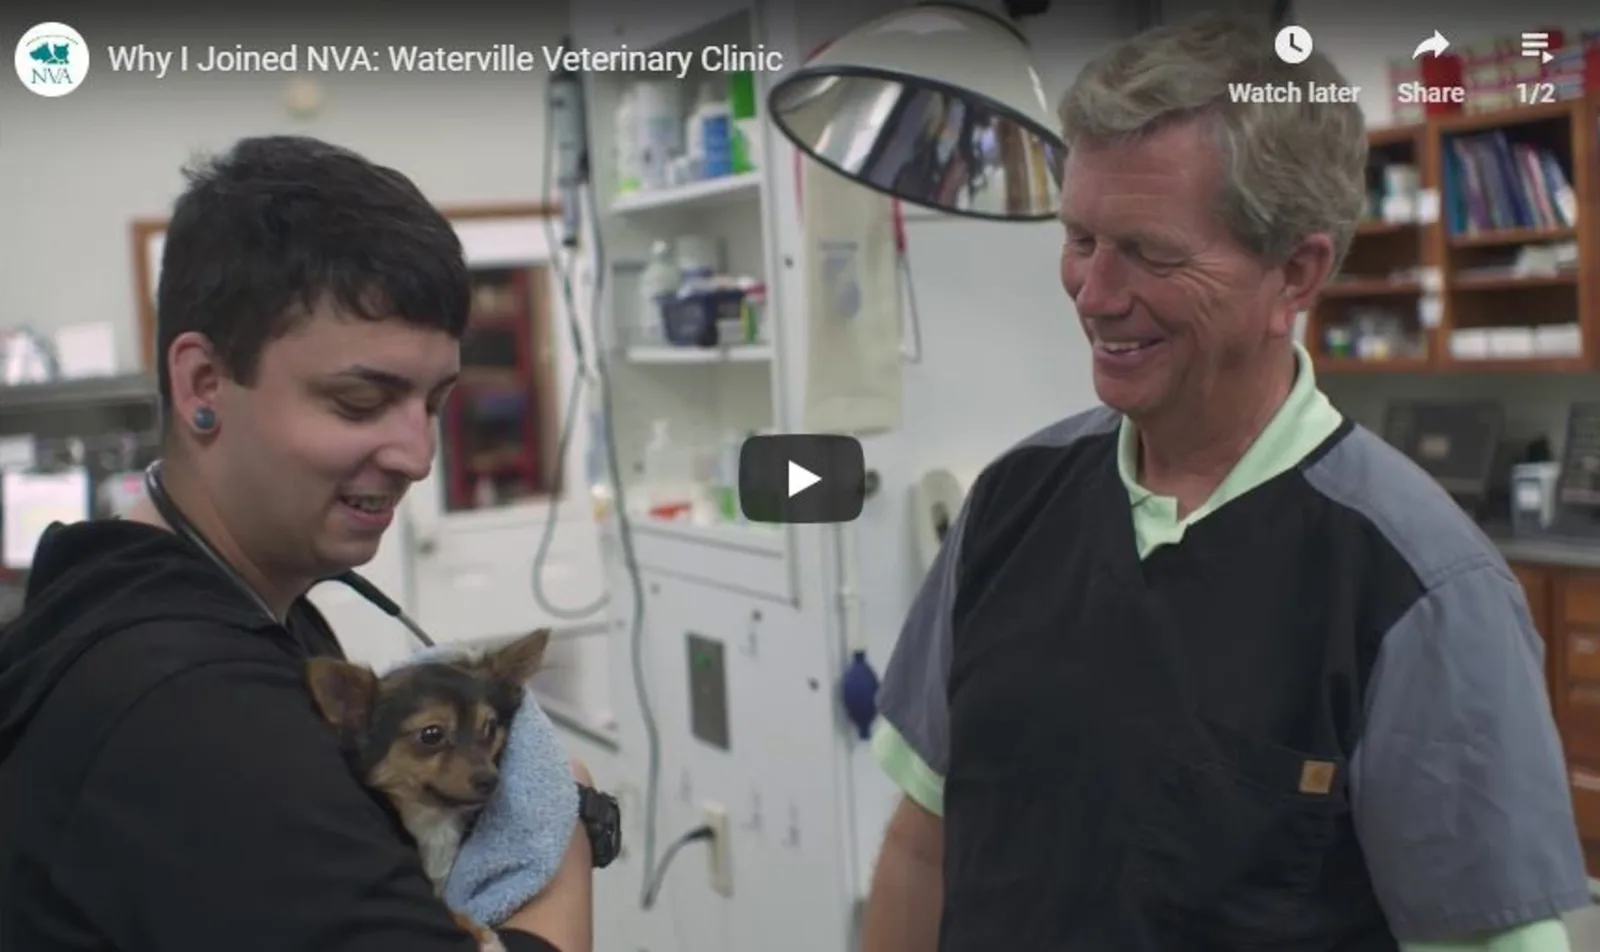 Waterville Veterinary Clinic testimonial video